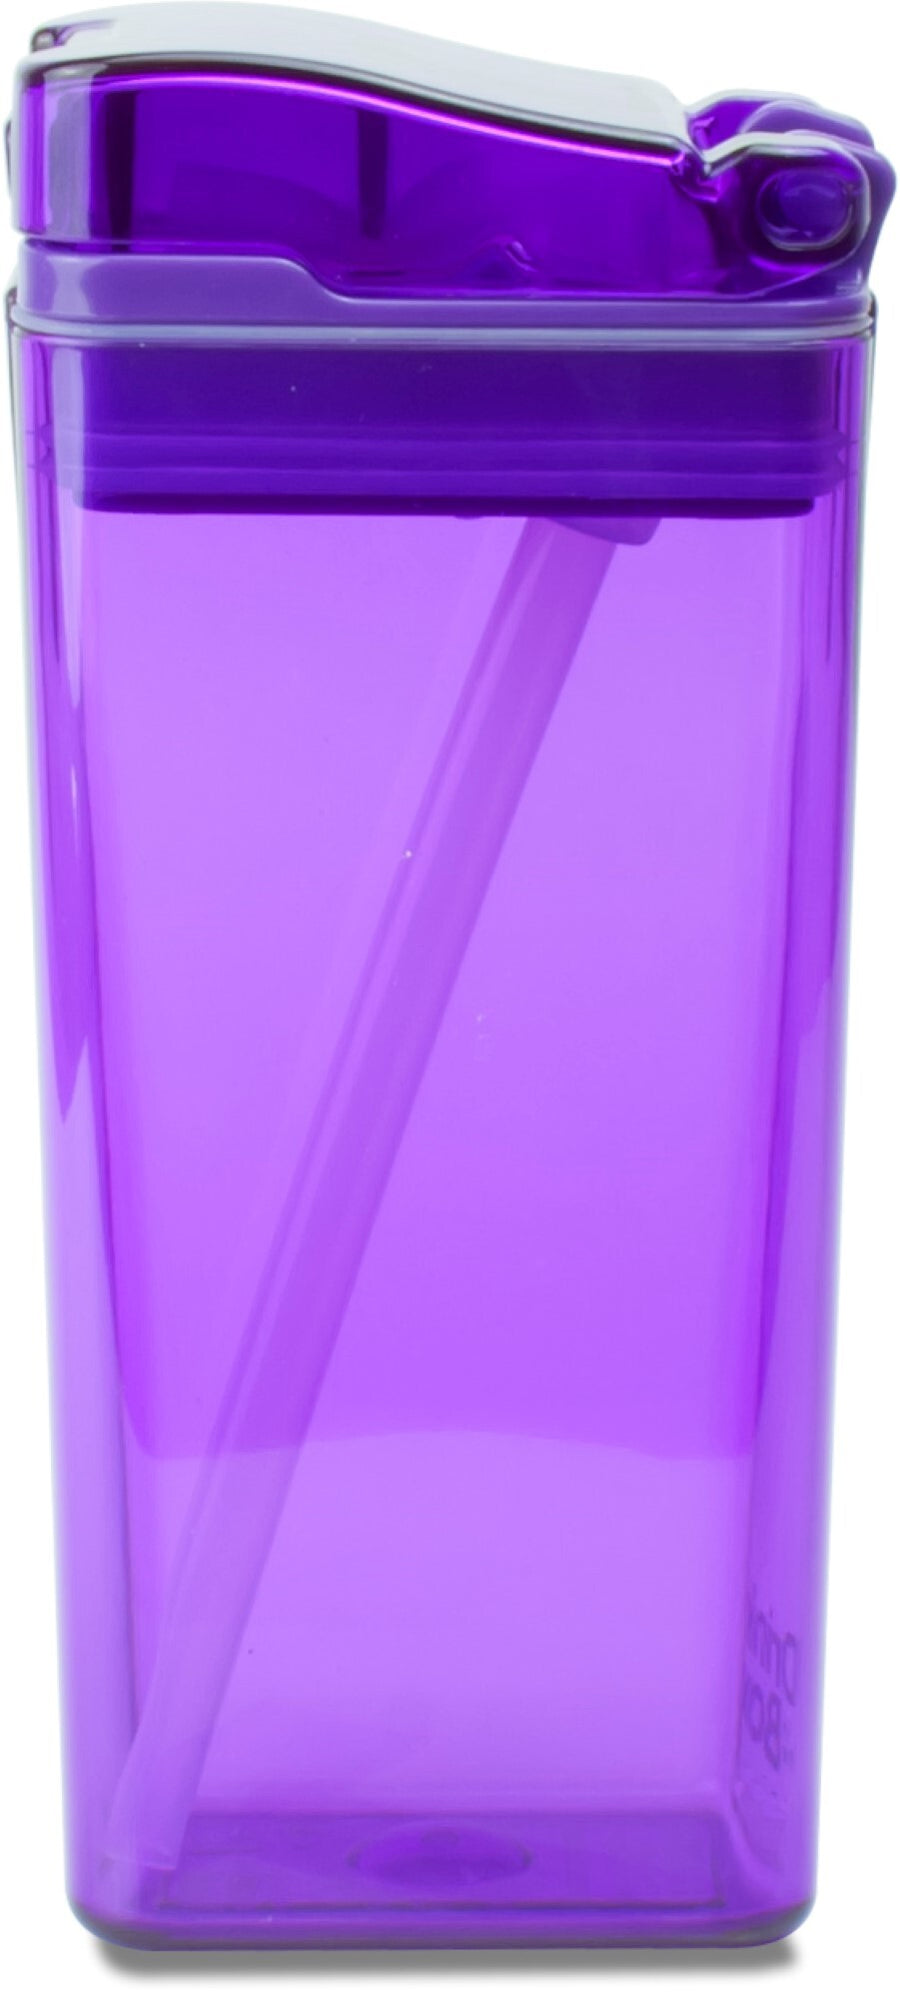 Drink in the Box - Purple - 12oz Drink in the Box - Purple - 12oz 55705245706